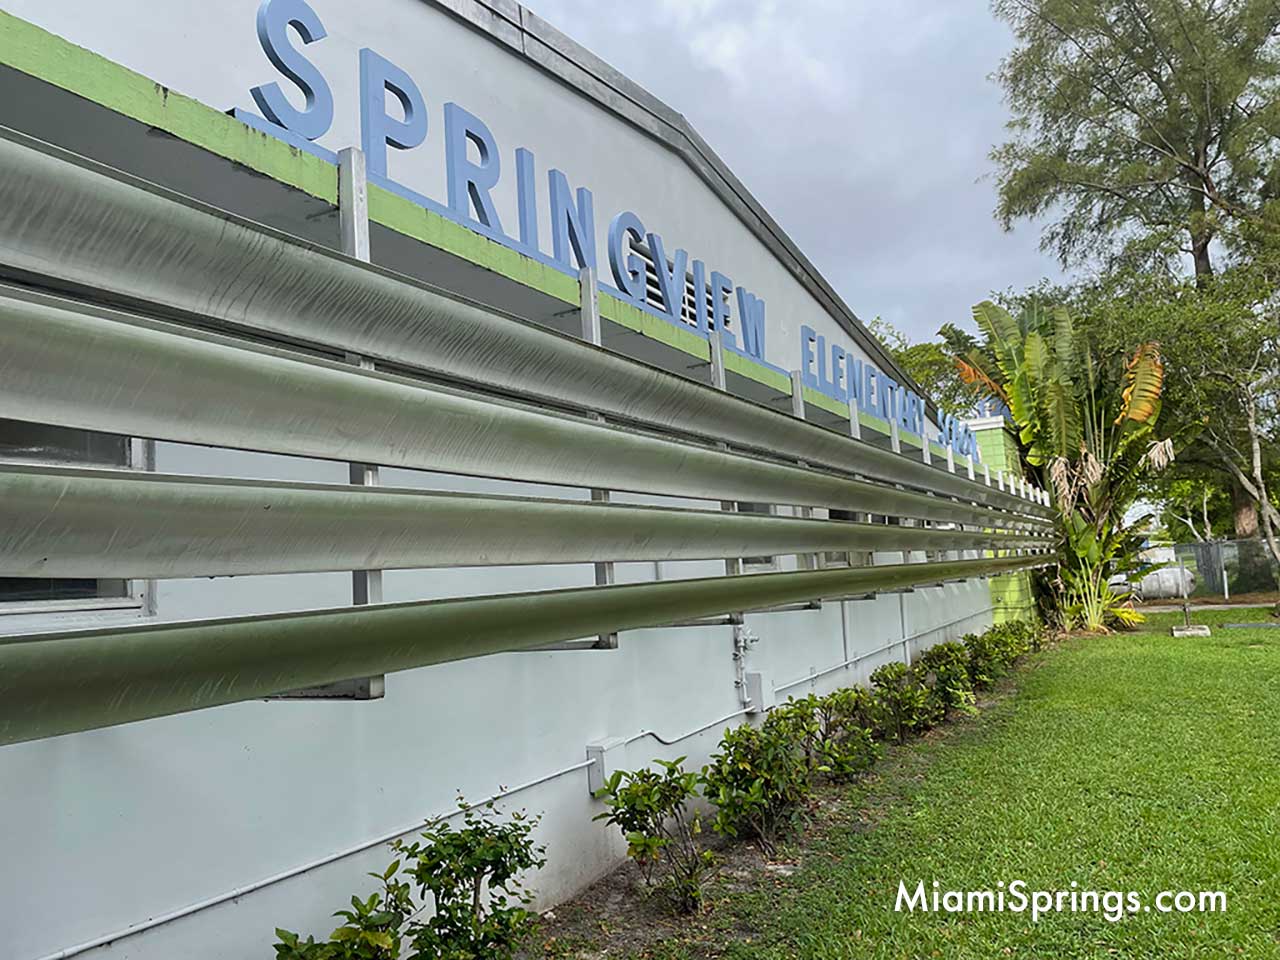 Springview Elementary in Miami Springs